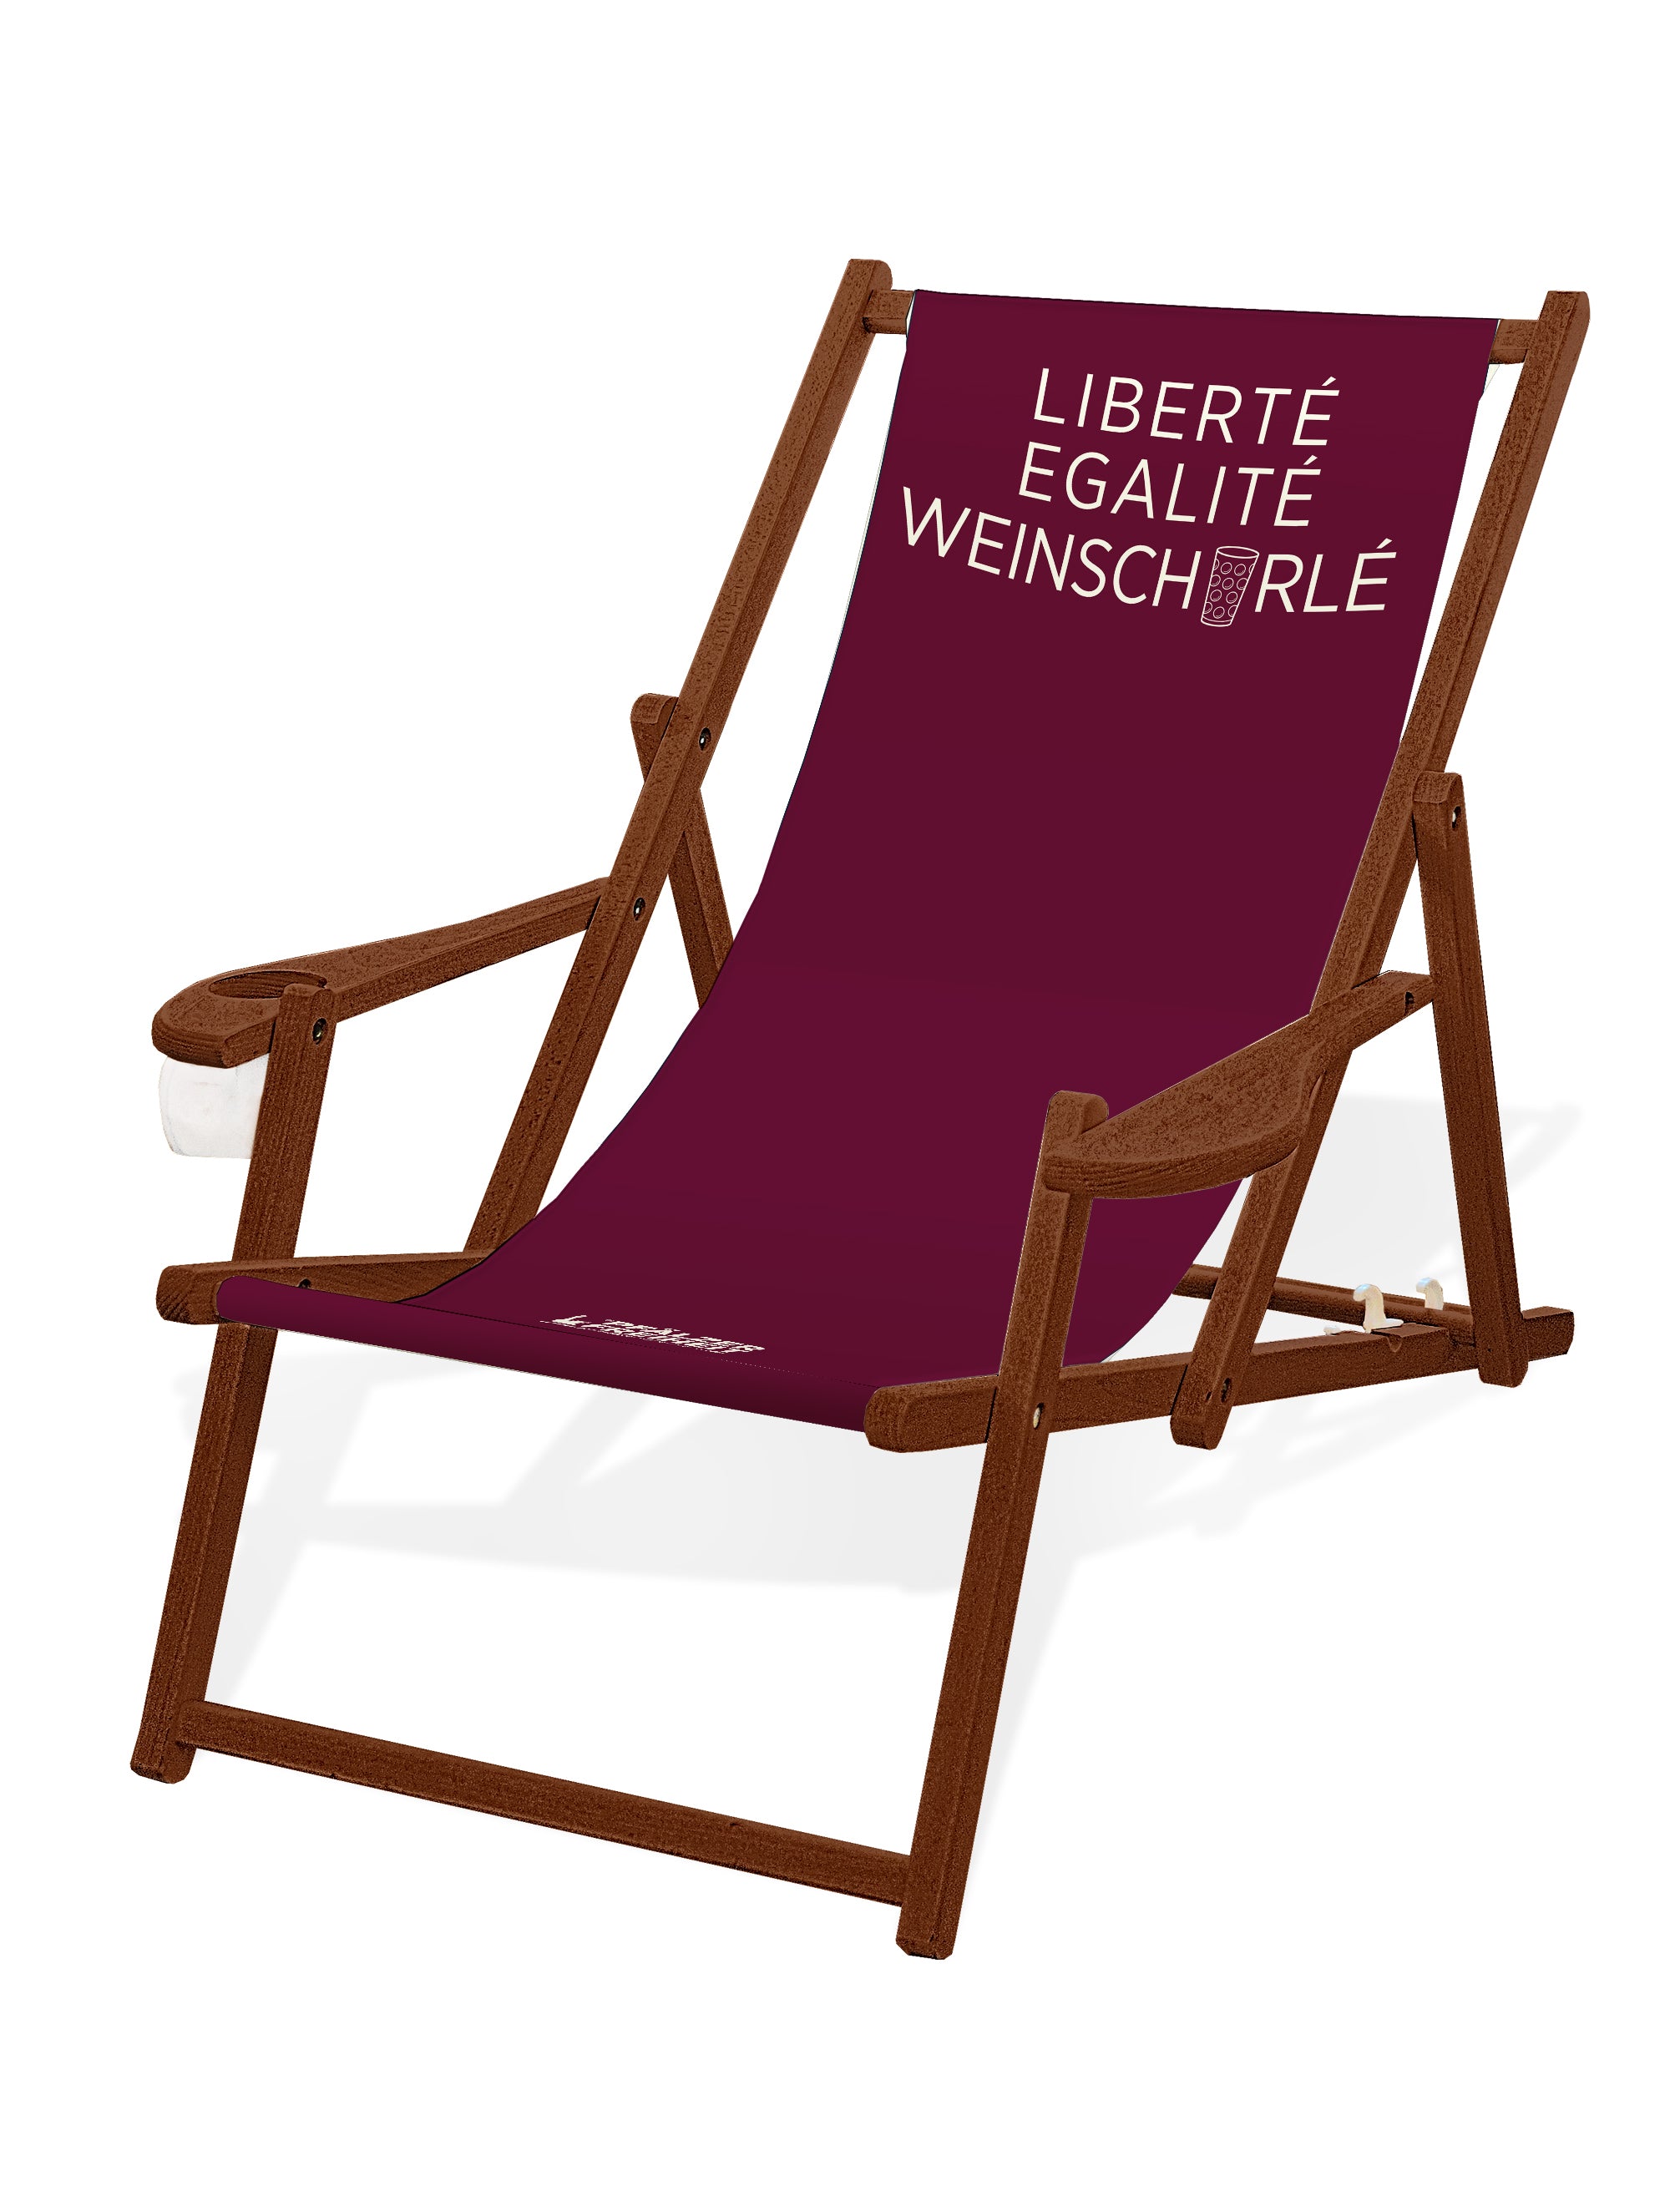 LIEGESTUHL MIT GETRÄNKEHALTER  "Liberté, Egalité, Weinschorlé" - Pfälzer Freiheit